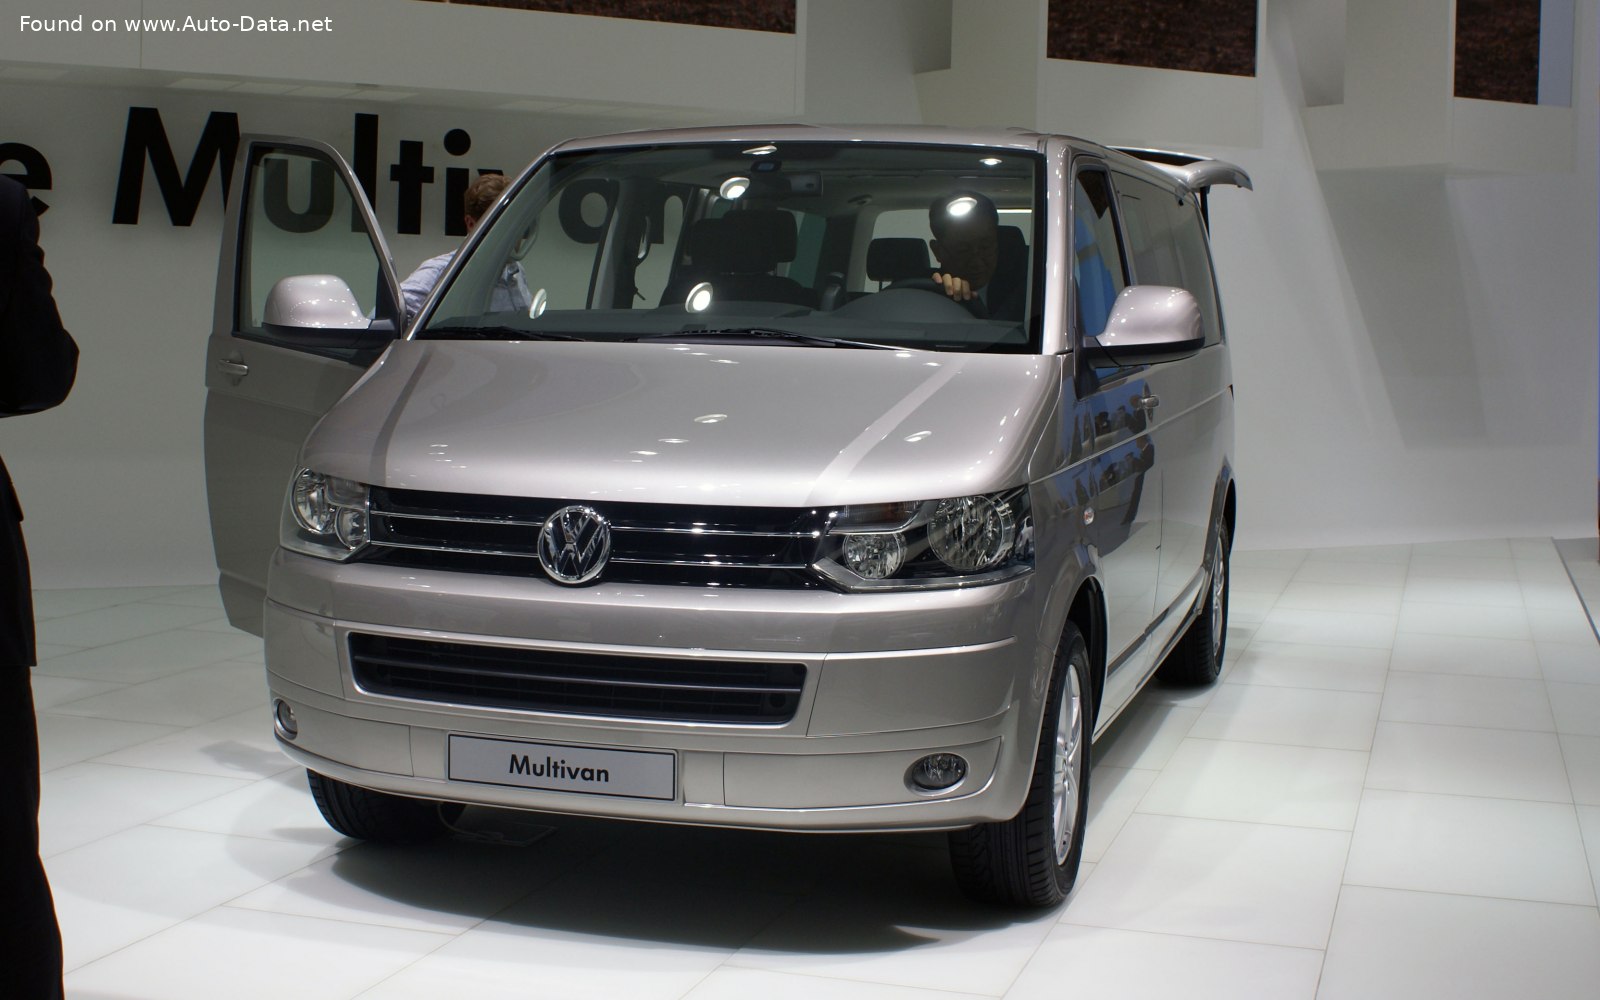 https://www.auto-data.net/images/f51/Volkswagen-Multivan-T5-facelift-2009.jpg